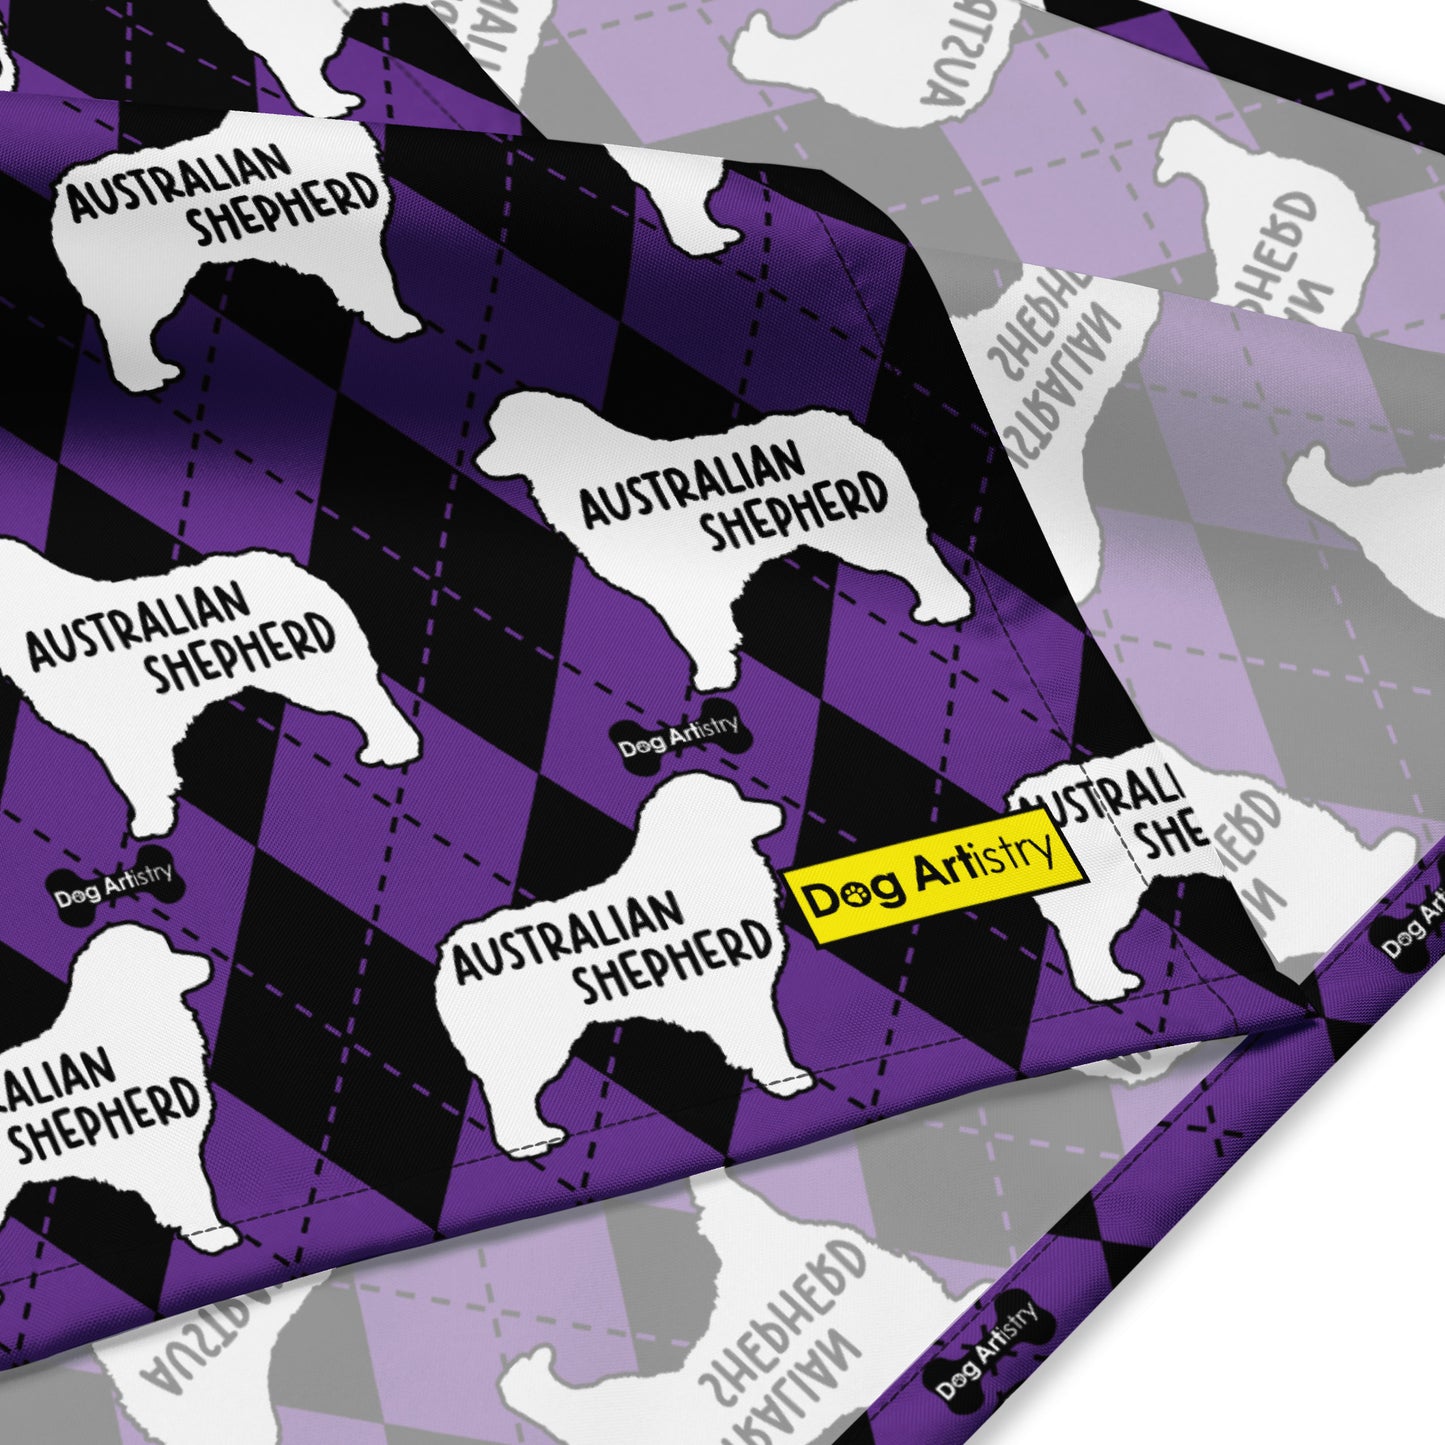 Australian Shepherd Argyle Purple and Black All-over print bandana